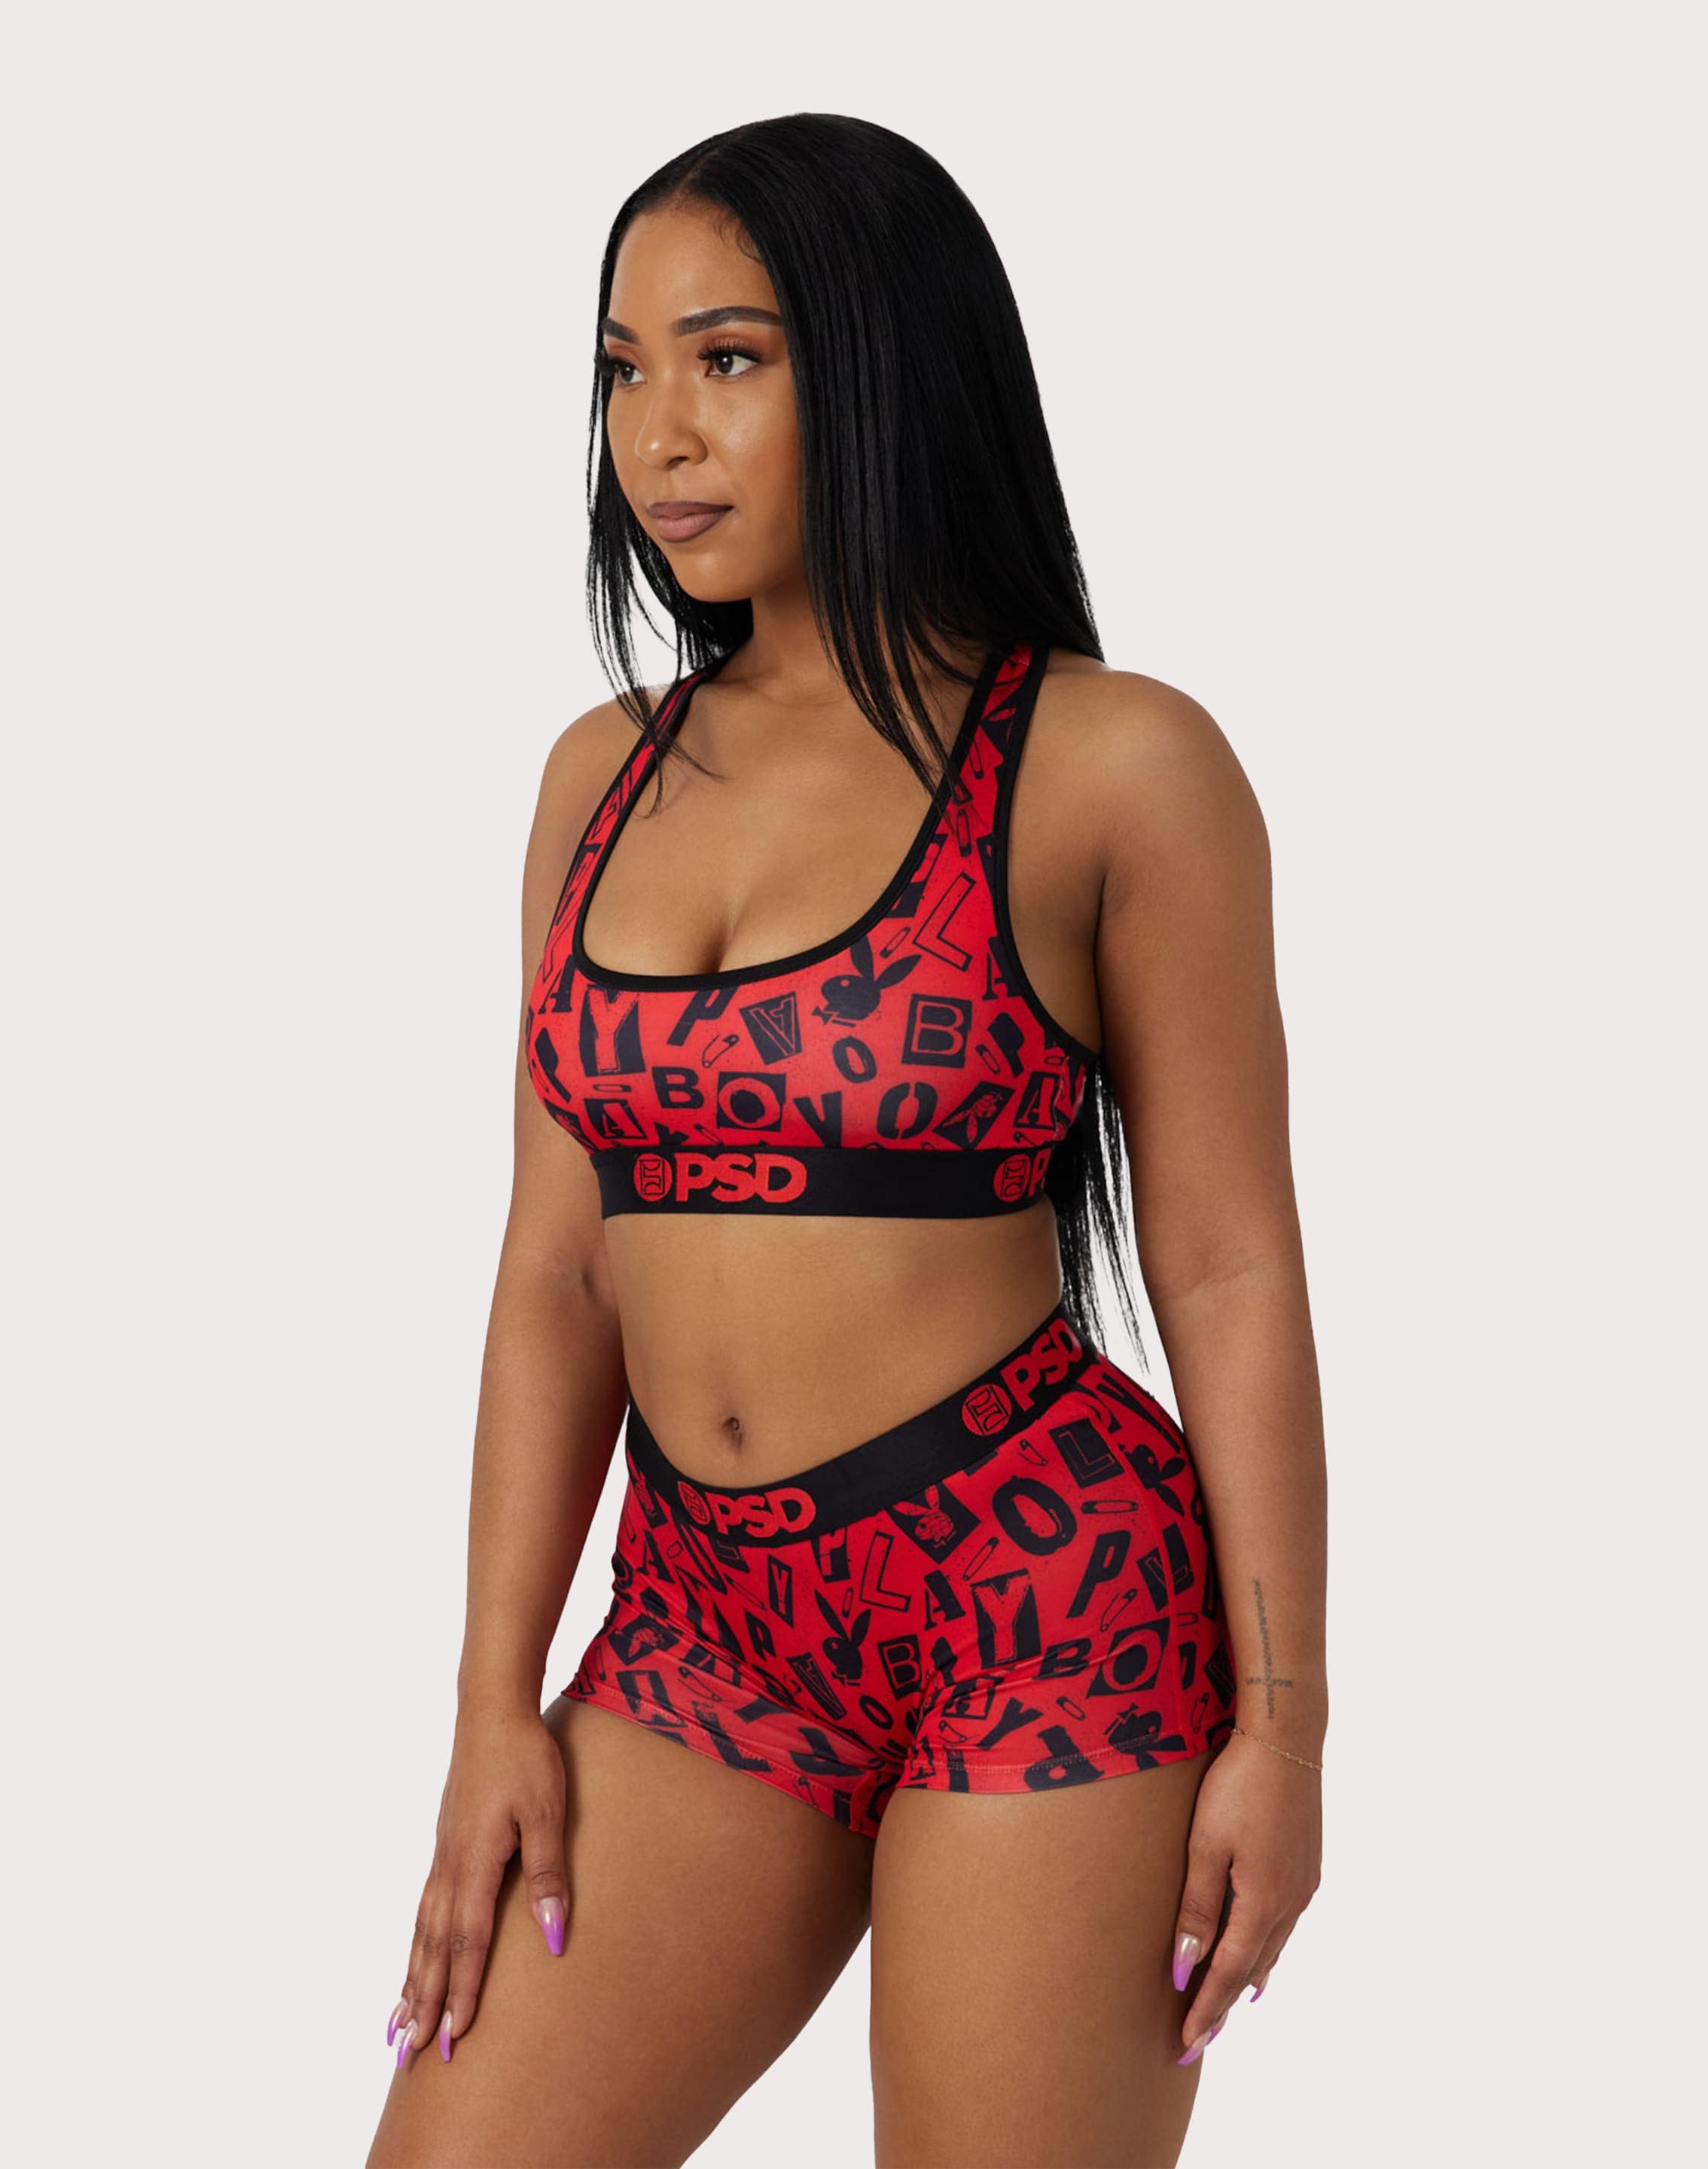 Woman body sweat red sports bra on black Stock Photo by ©alanpoulson  27404607